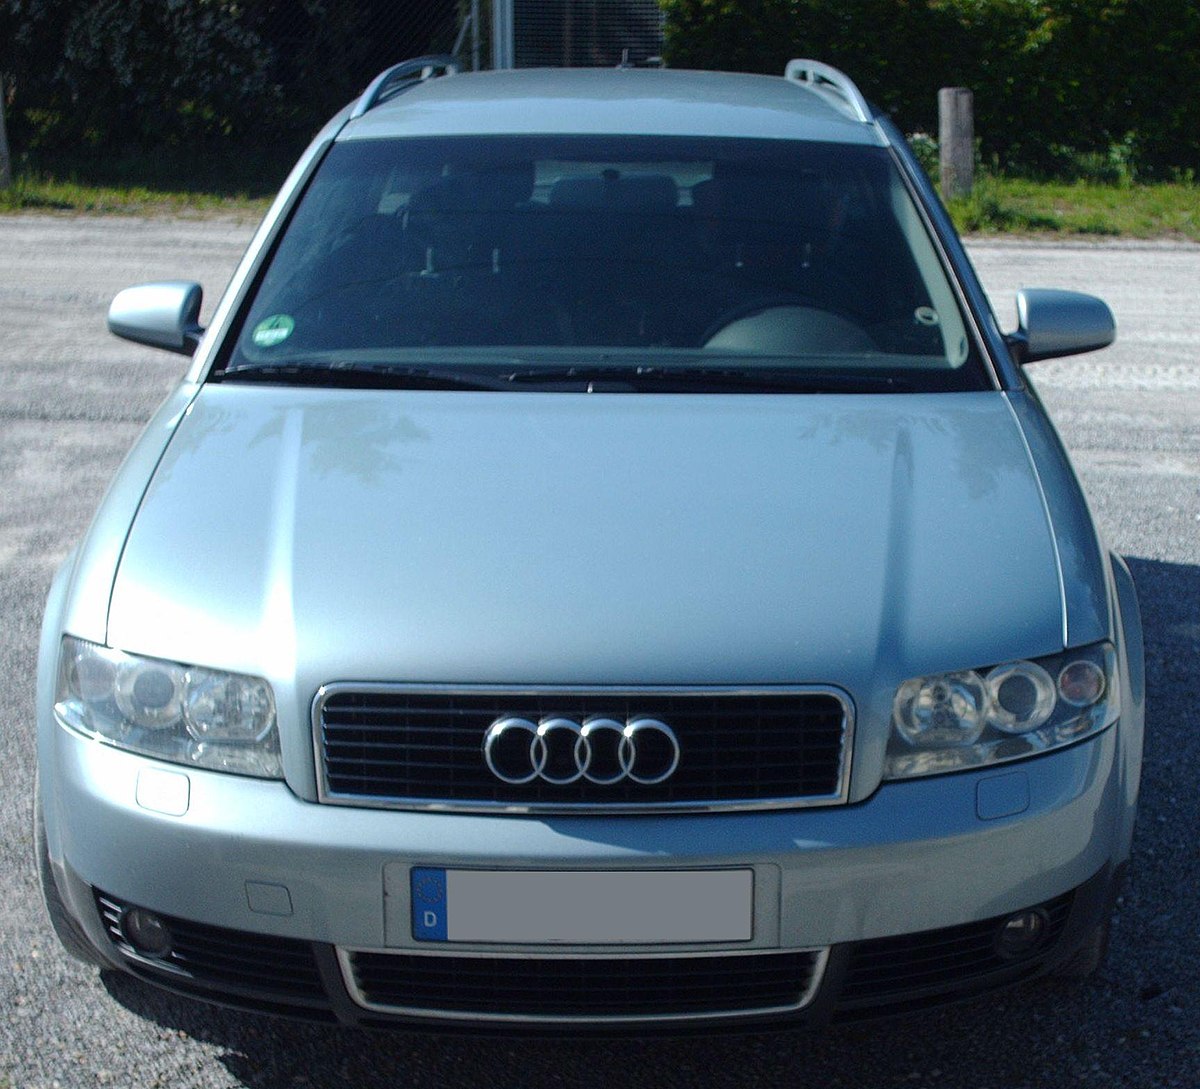 File:Audi A4 B6 front 20080612.jpg - Wikimedia Commons